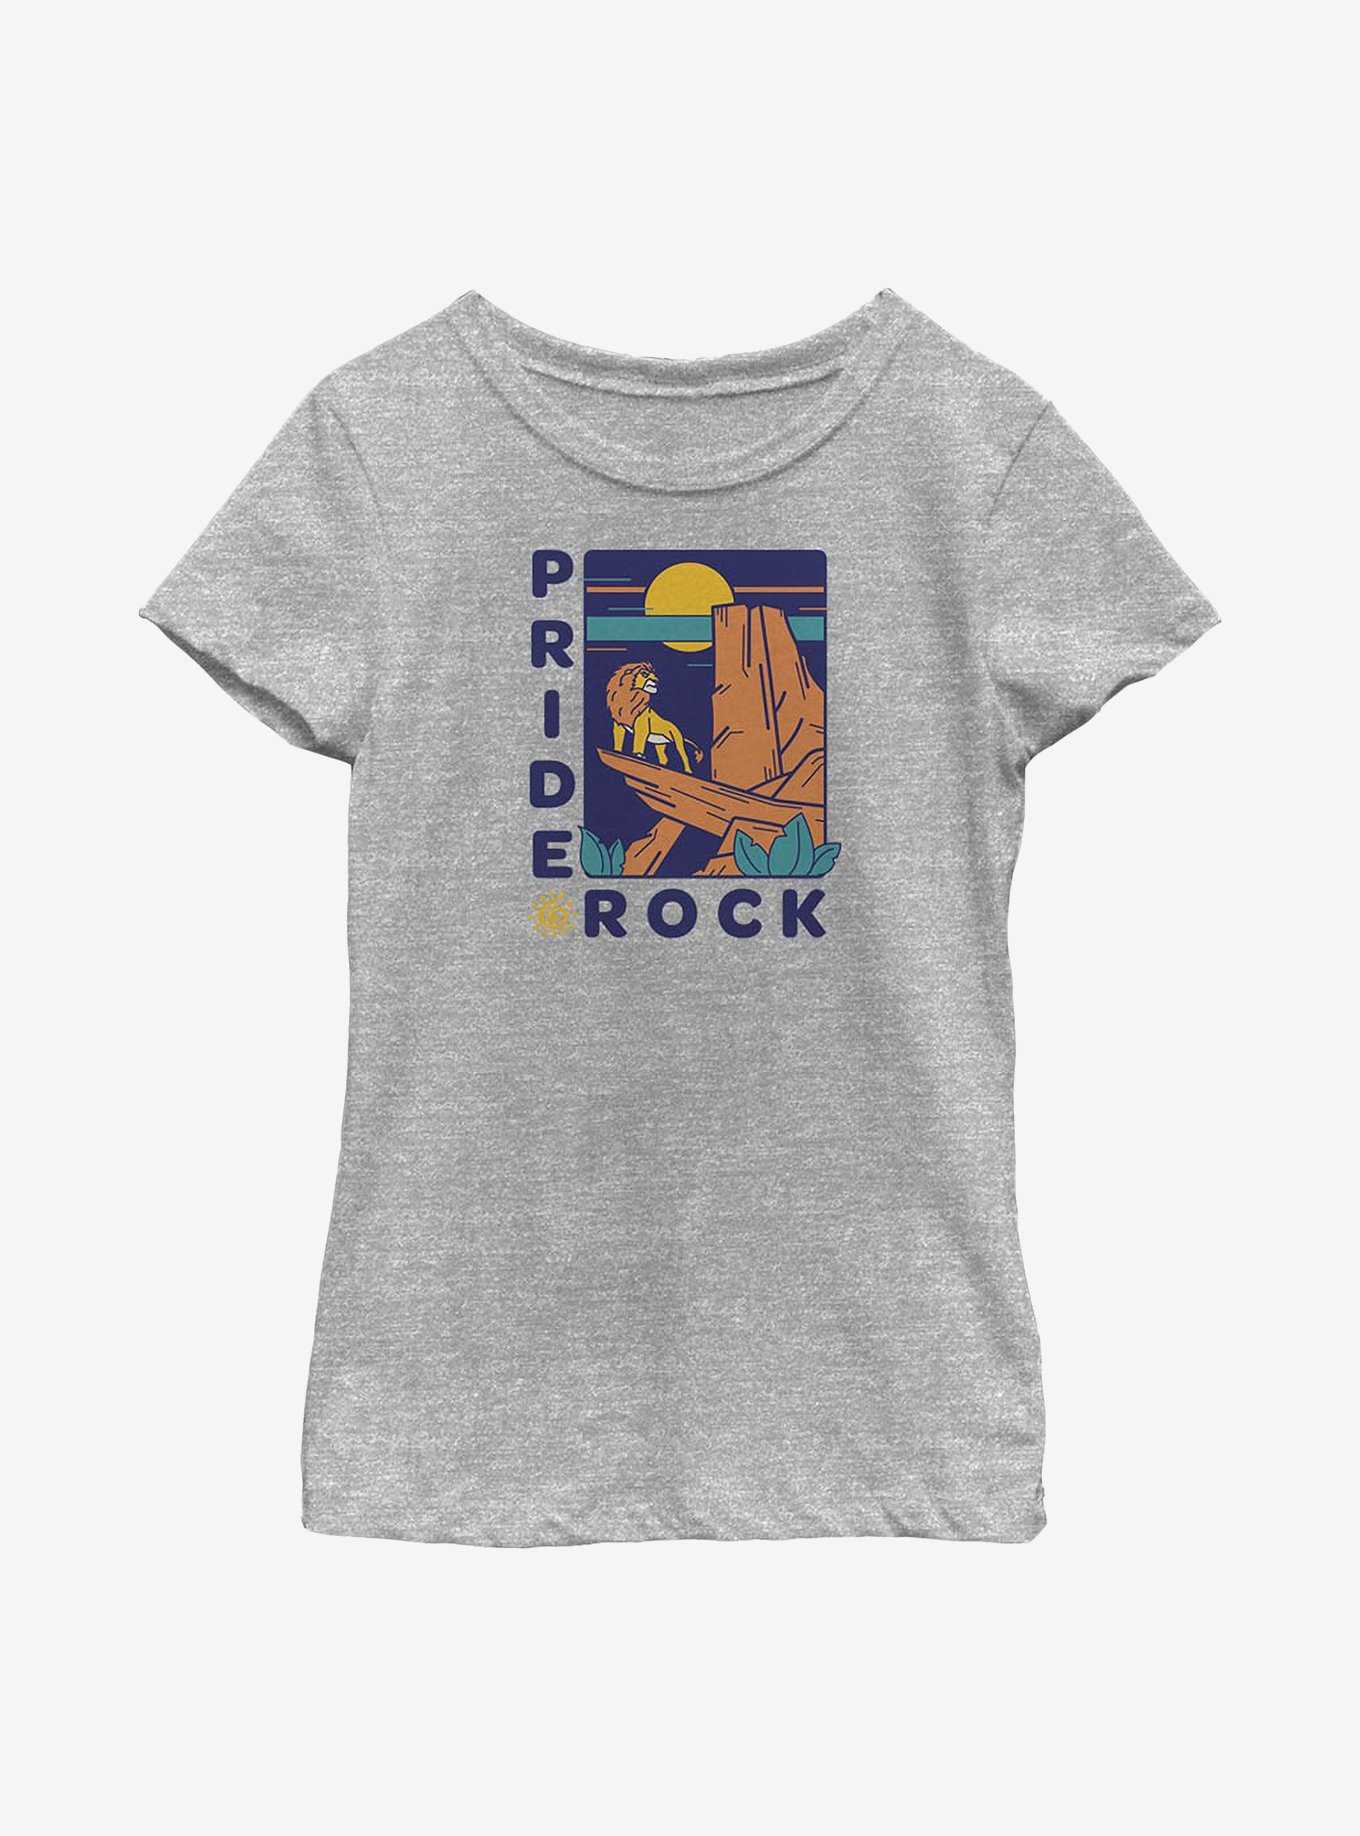 Disney The Lion King Pride Rock Badge Youth Girls T-Shirt, , hi-res